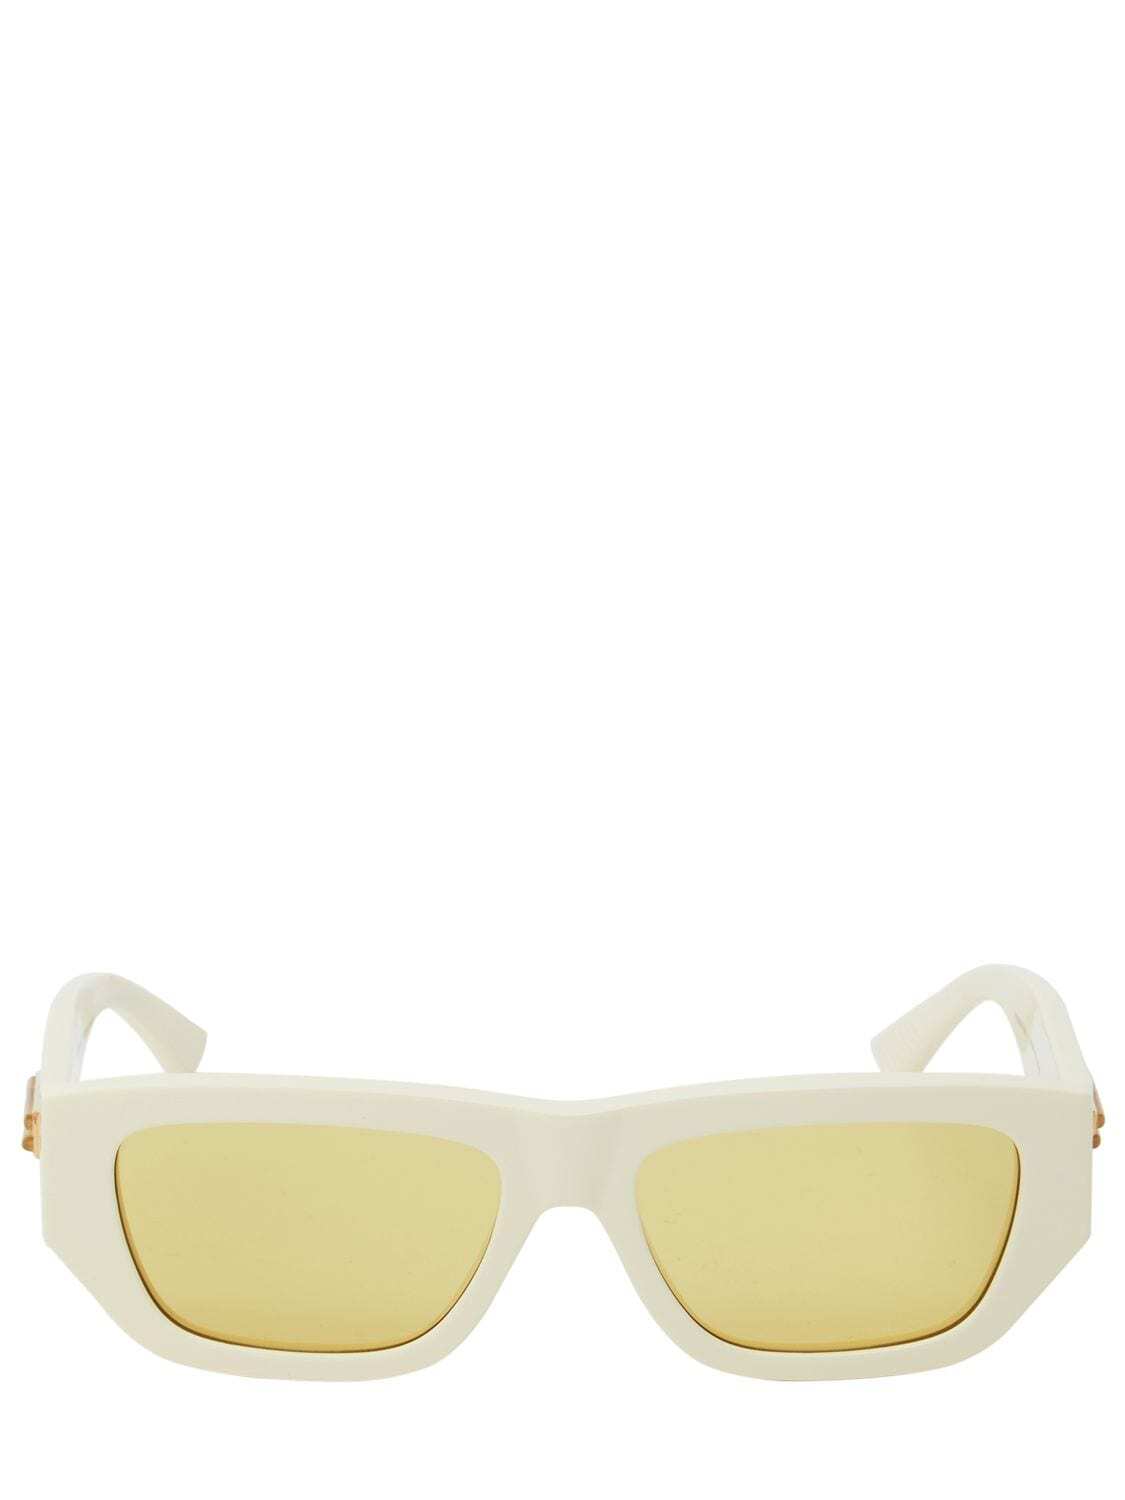 BOTTEGA VENETA Bv1252s Acetate Sunglasses in ivory / yellow